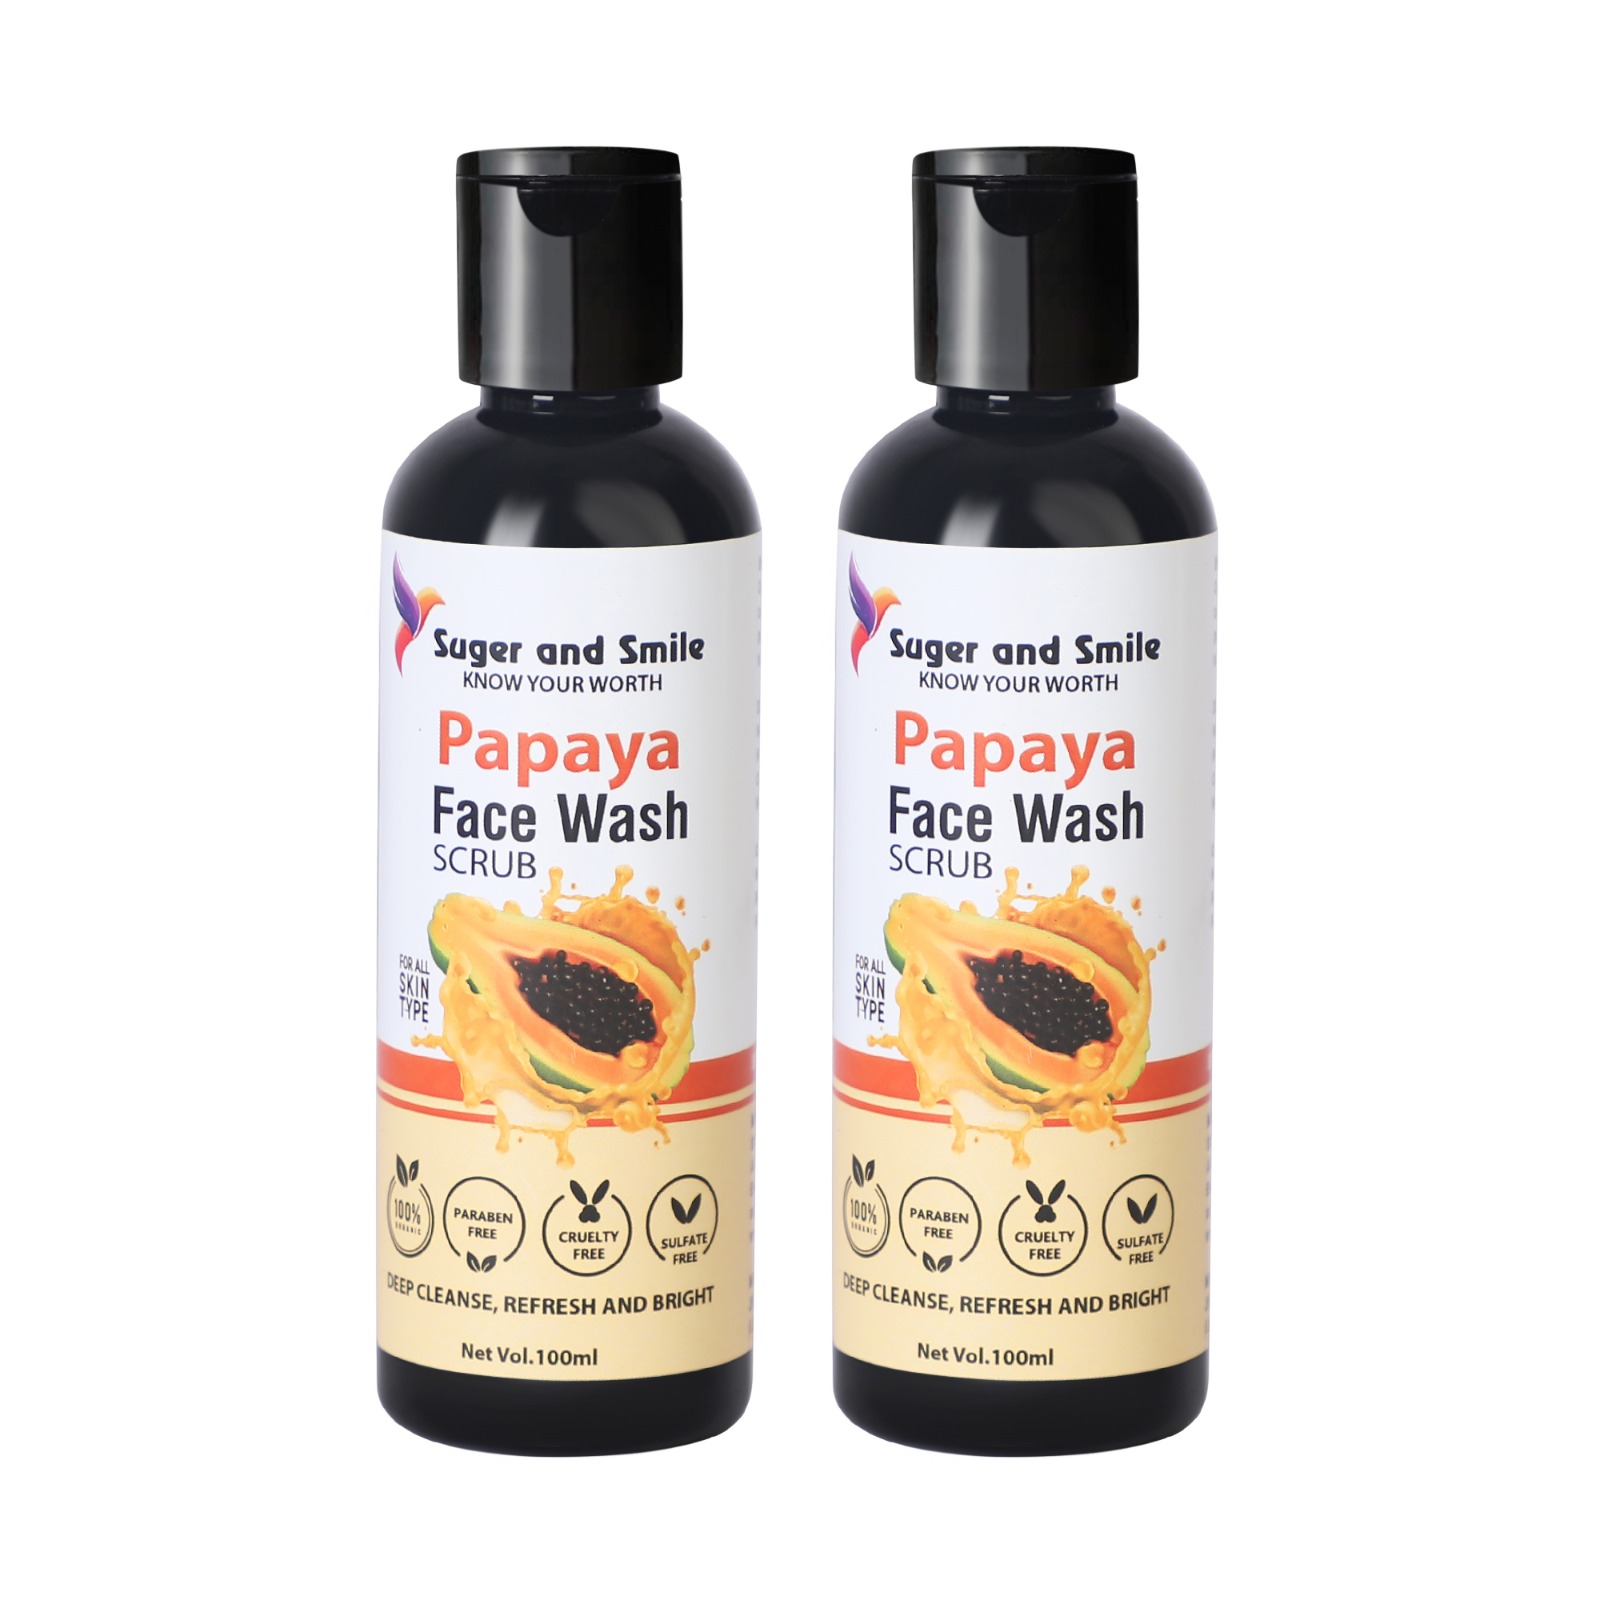 Papaya facewash scrub pack of 2(100g each)